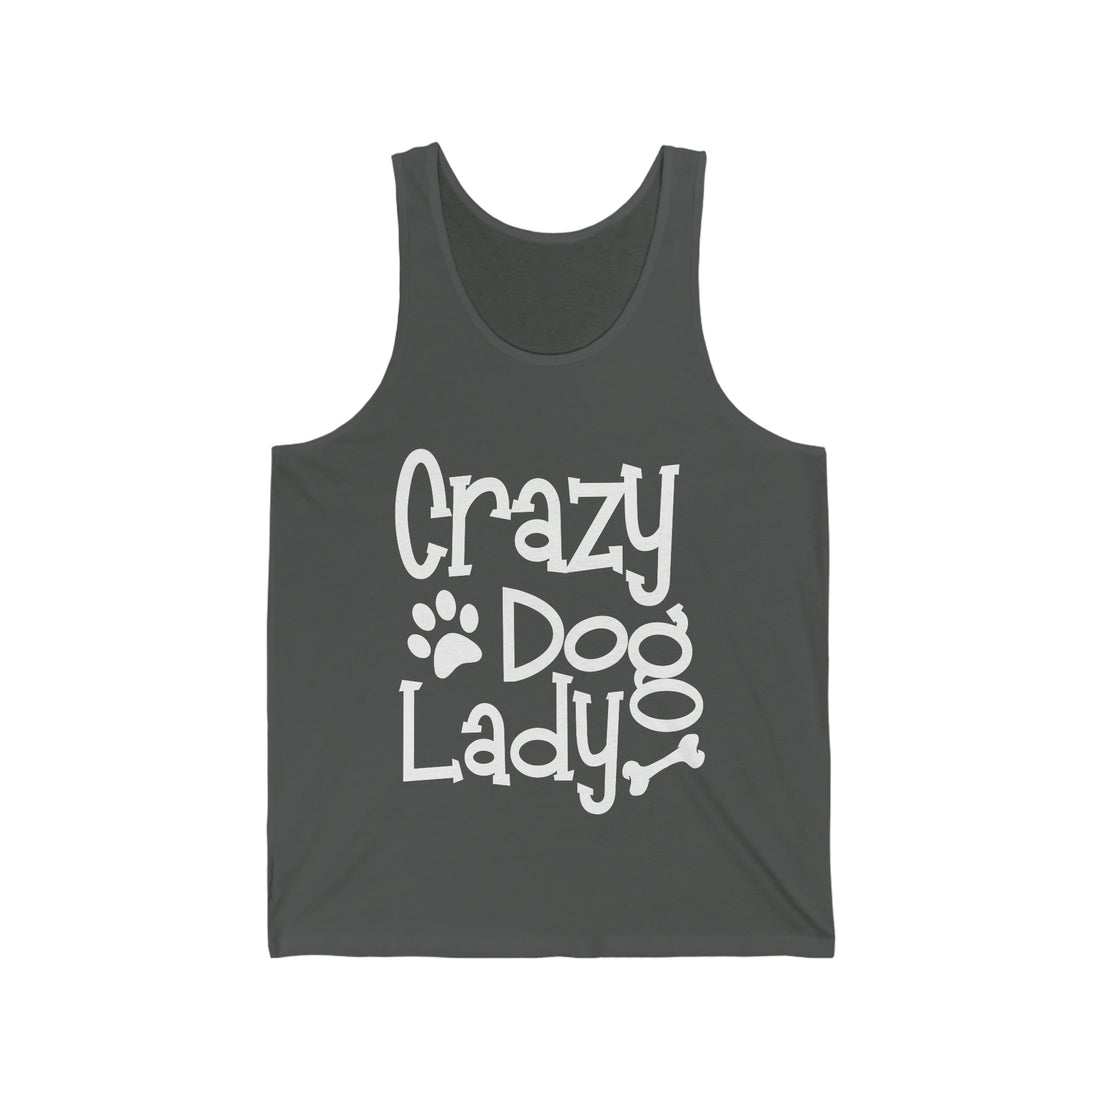 Crazy Dog Lady - Unisex Jersey Tank Top